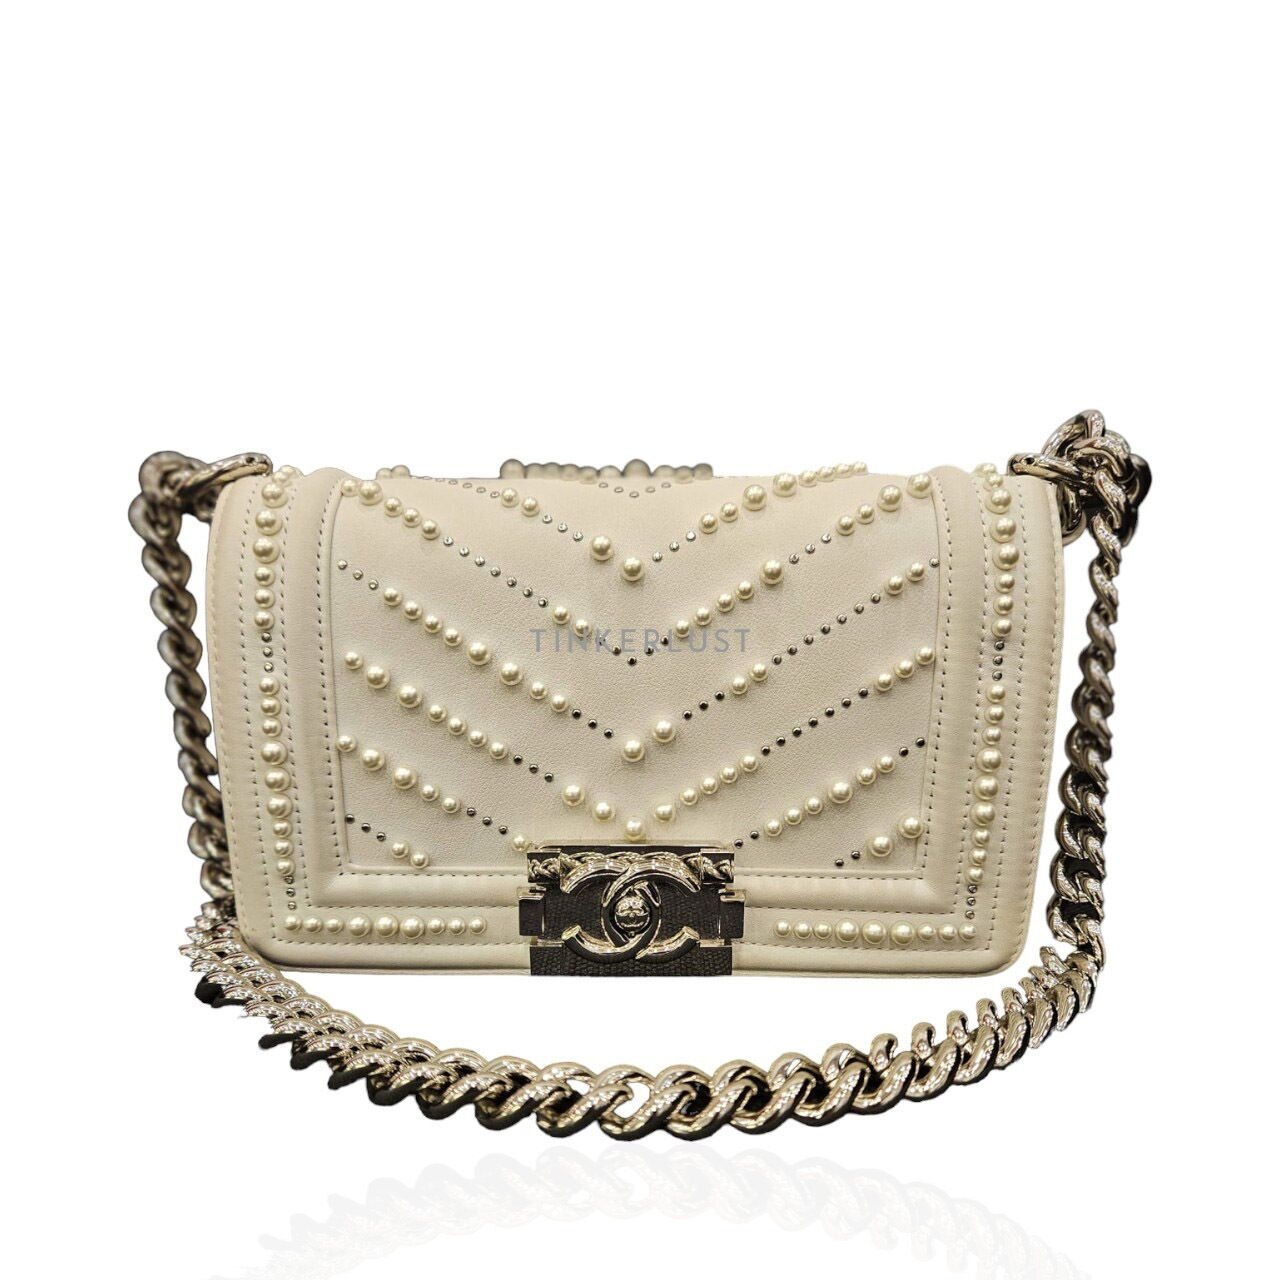 Chanel Boy Small Pearls Broken White Chevron #29 Shoulder Bag